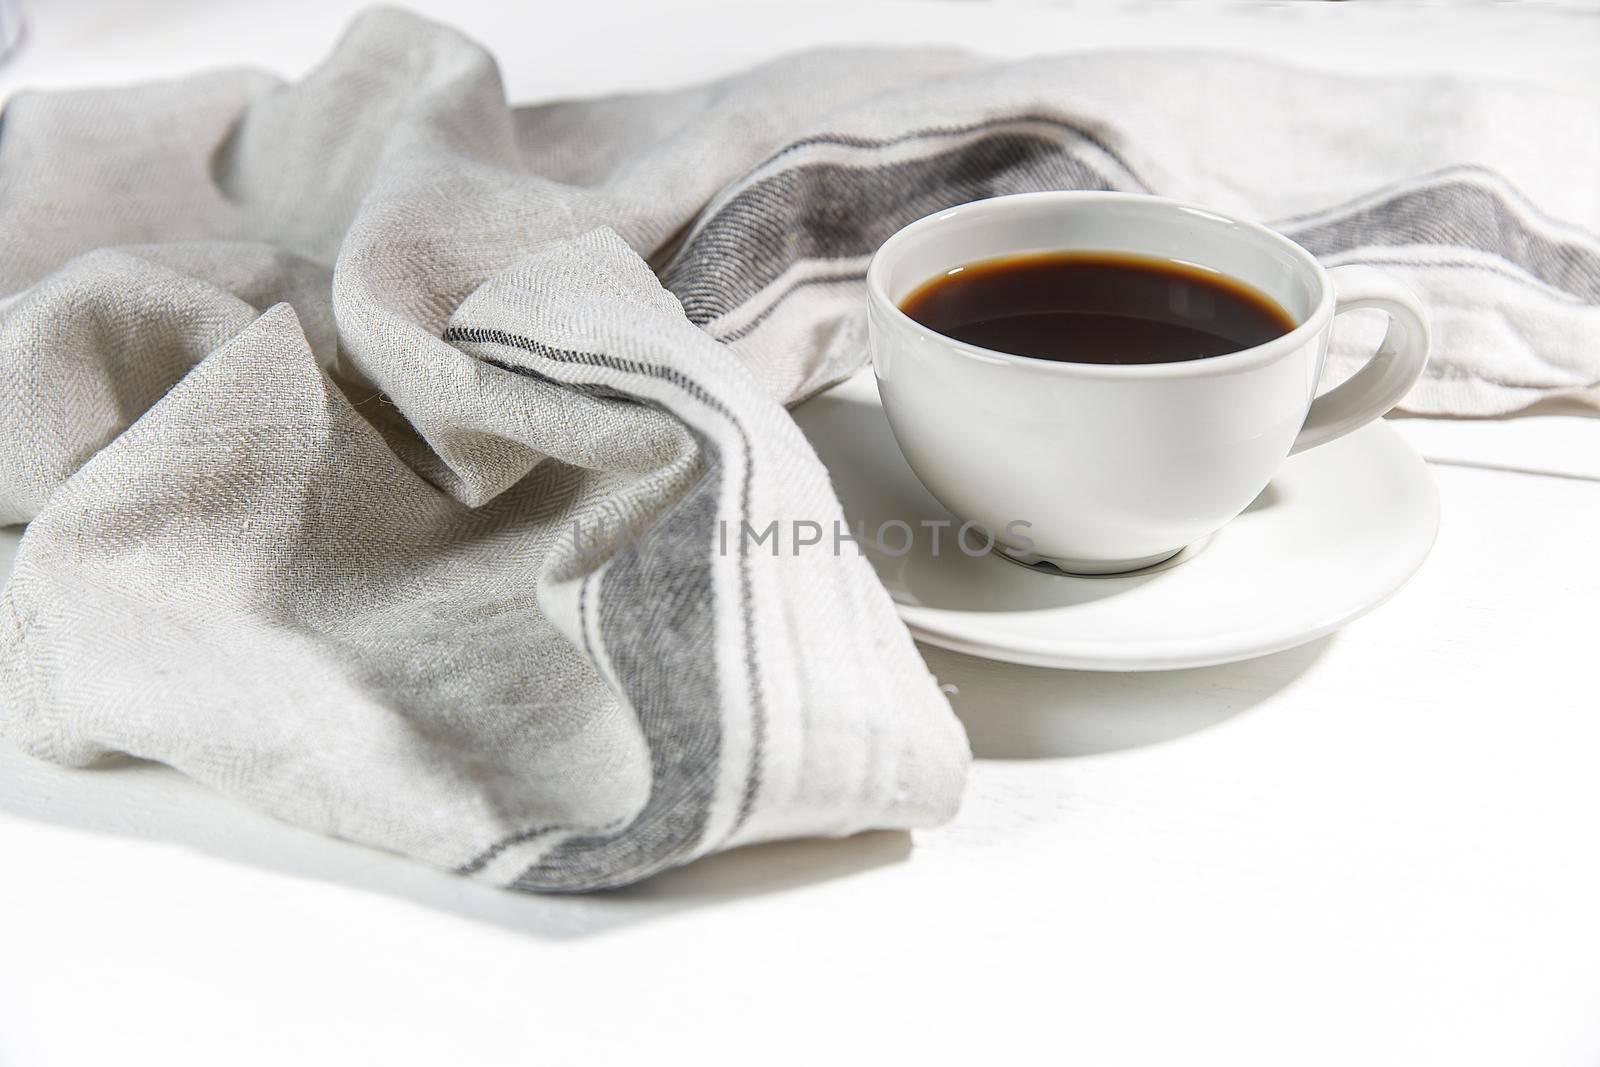 Cup of tea with napkin on white background by elenarostunova